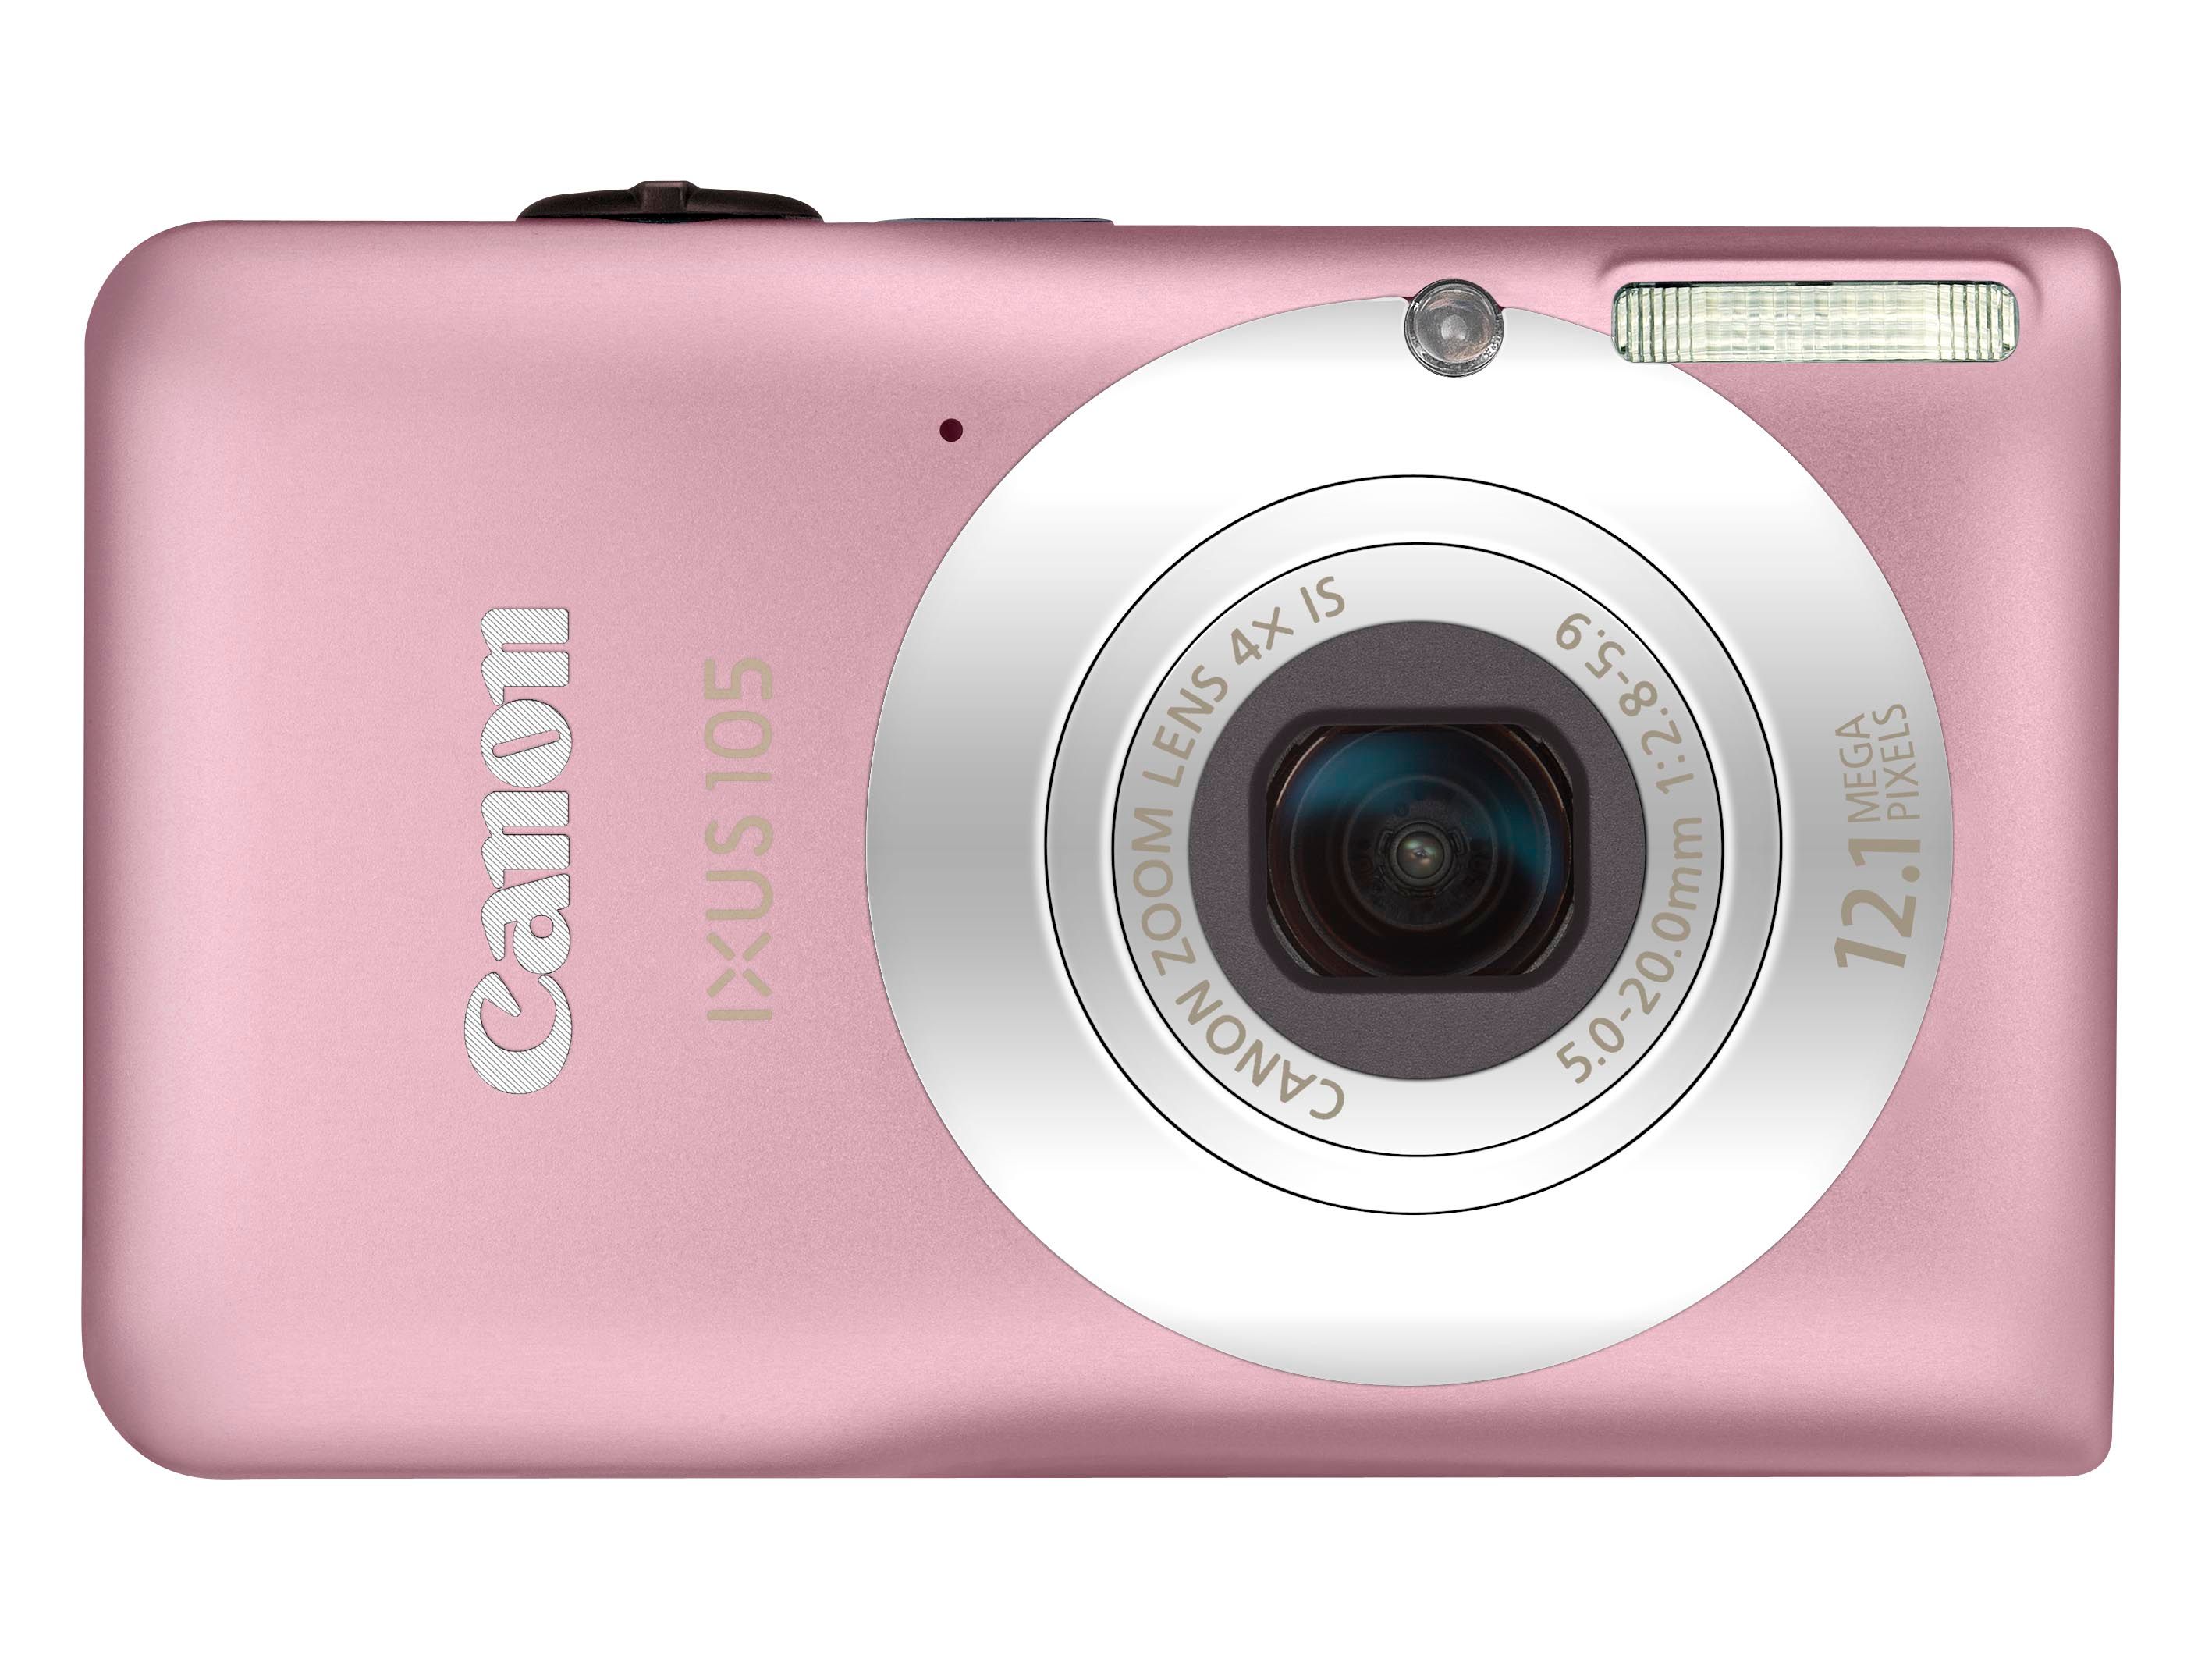 canon ixus 105 compact camera image 2